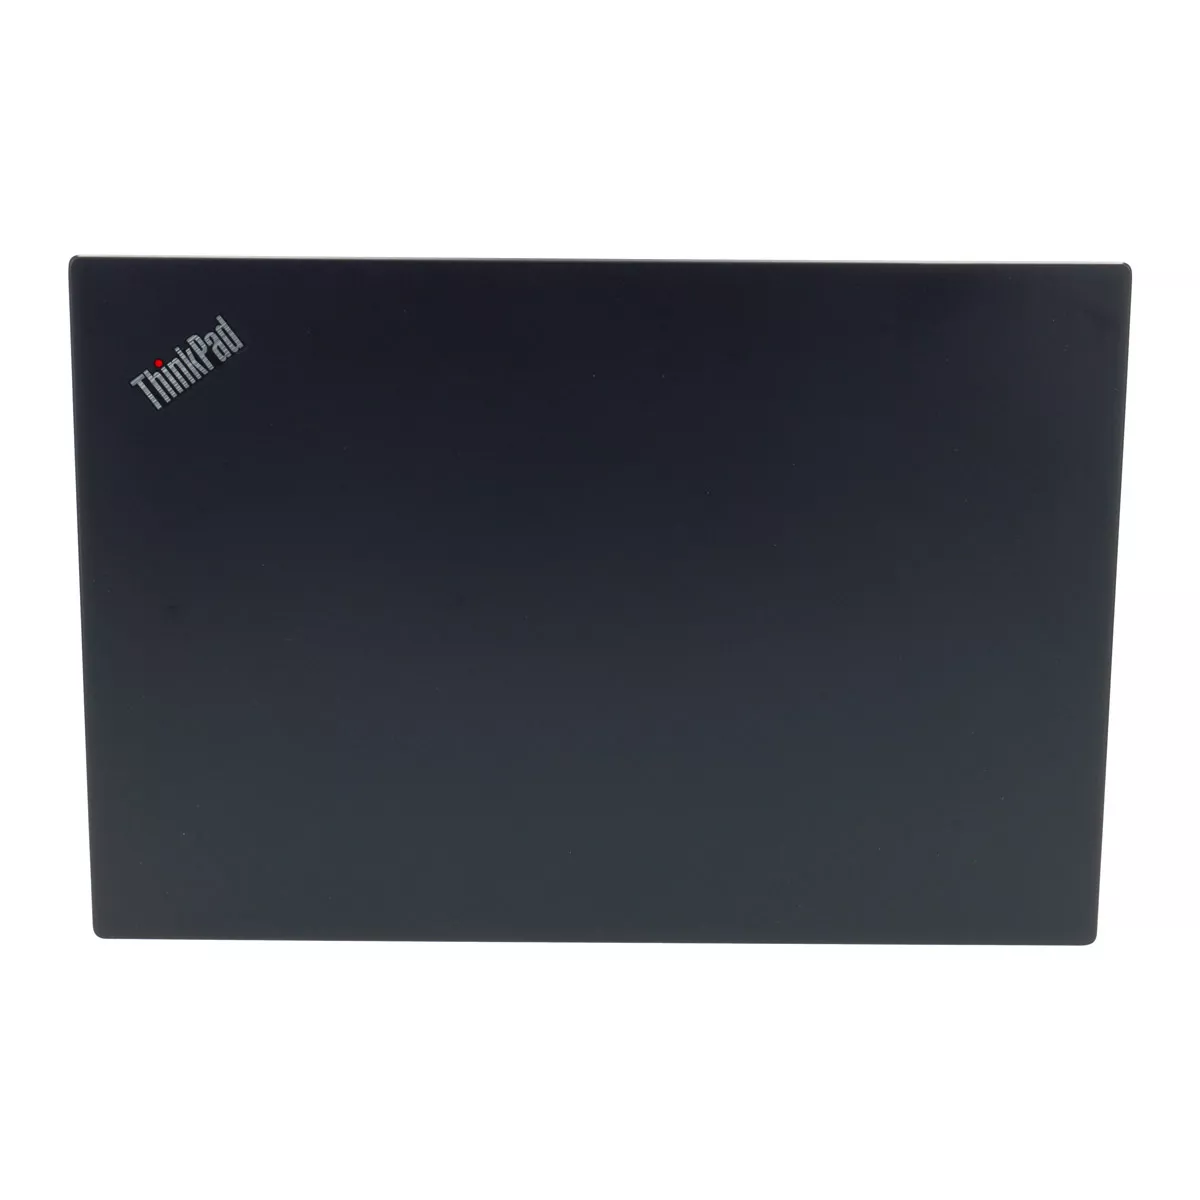 Lenovo ThinkPad T490s Core i5 8365U Full-HD Touch 240 GB M.2 nVME SSD Webcam B